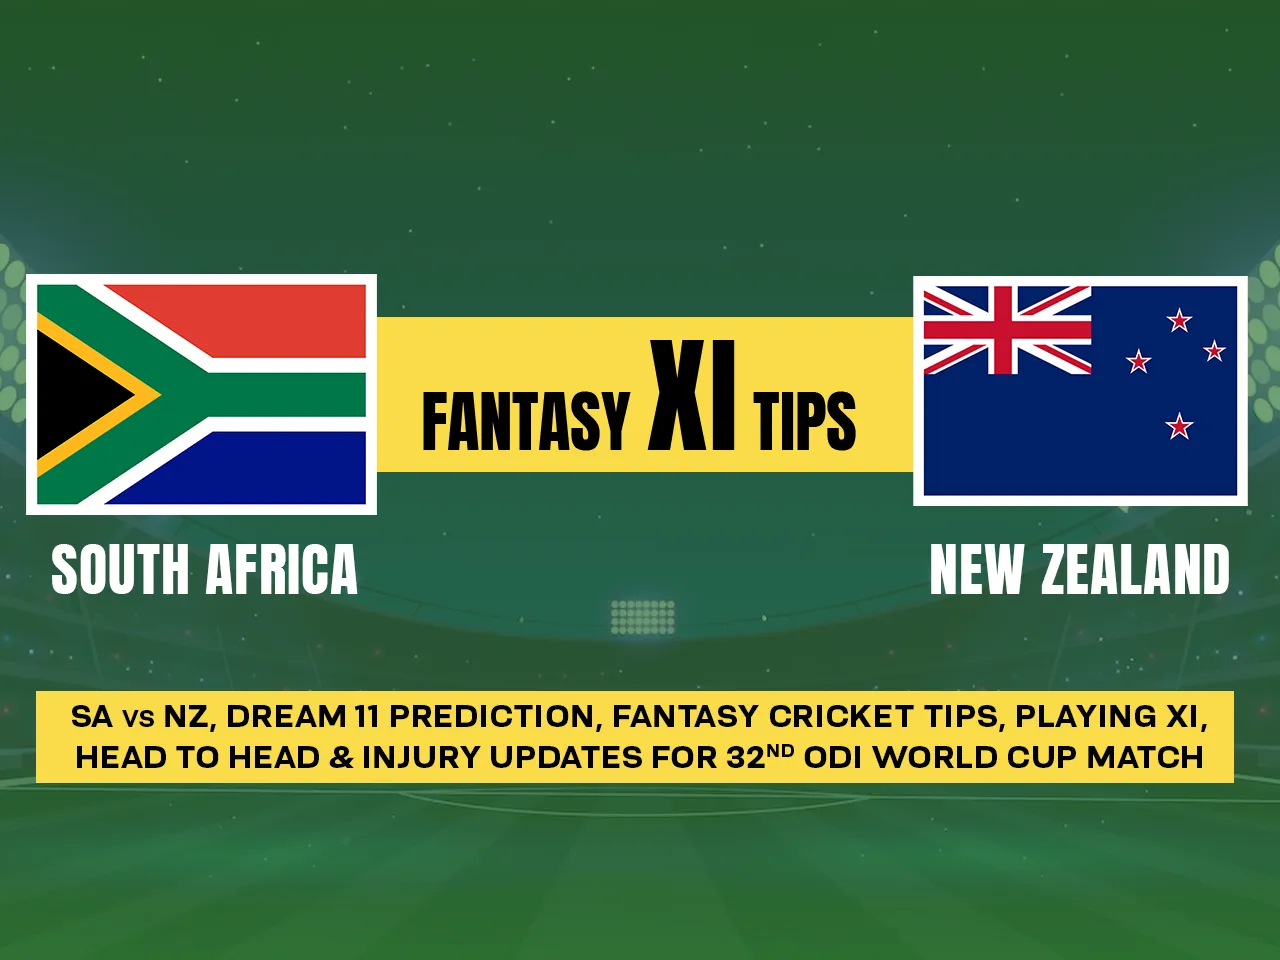 NZ vs SA Dream 11